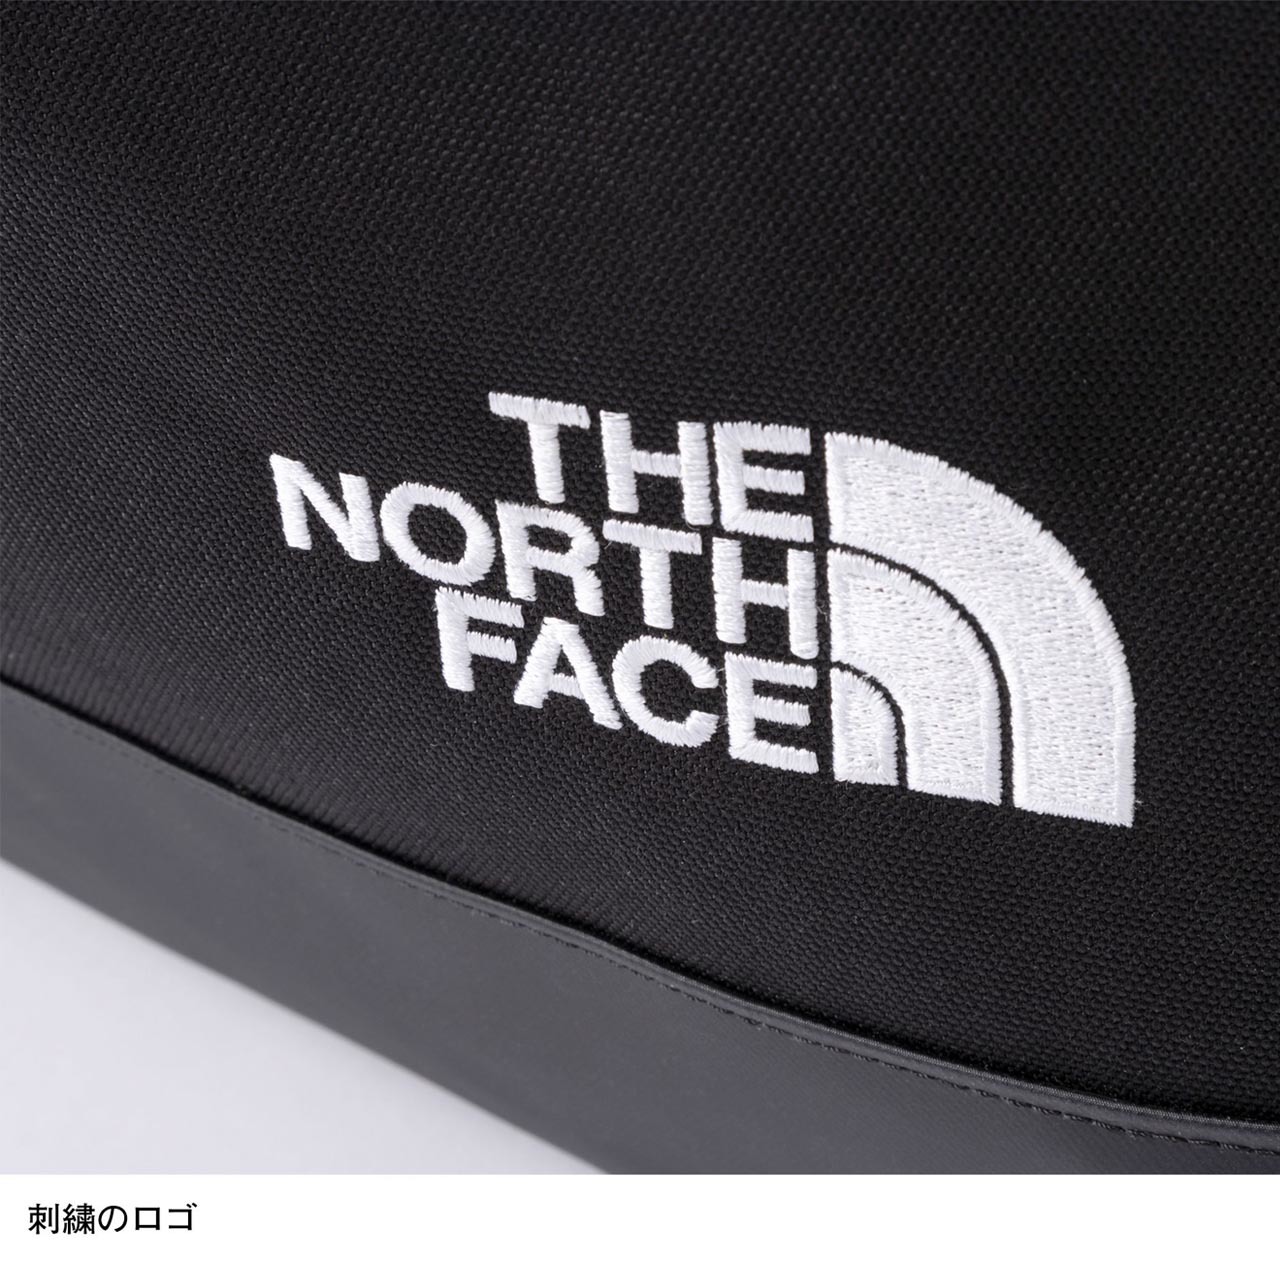 THE NORTH FACE [ザ・ノース・フェイス] Fieludens Gear Tote L [NM82200]_f0051306_09251068.jpg